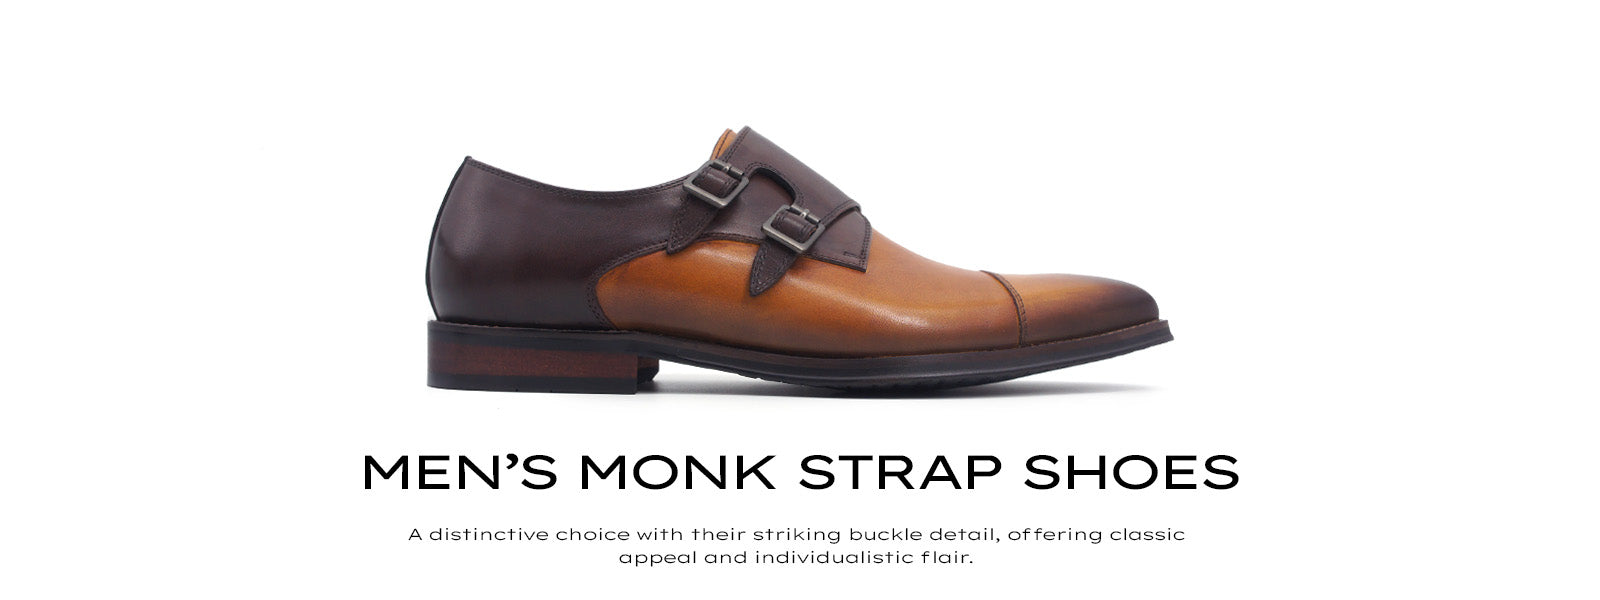 Monk straps